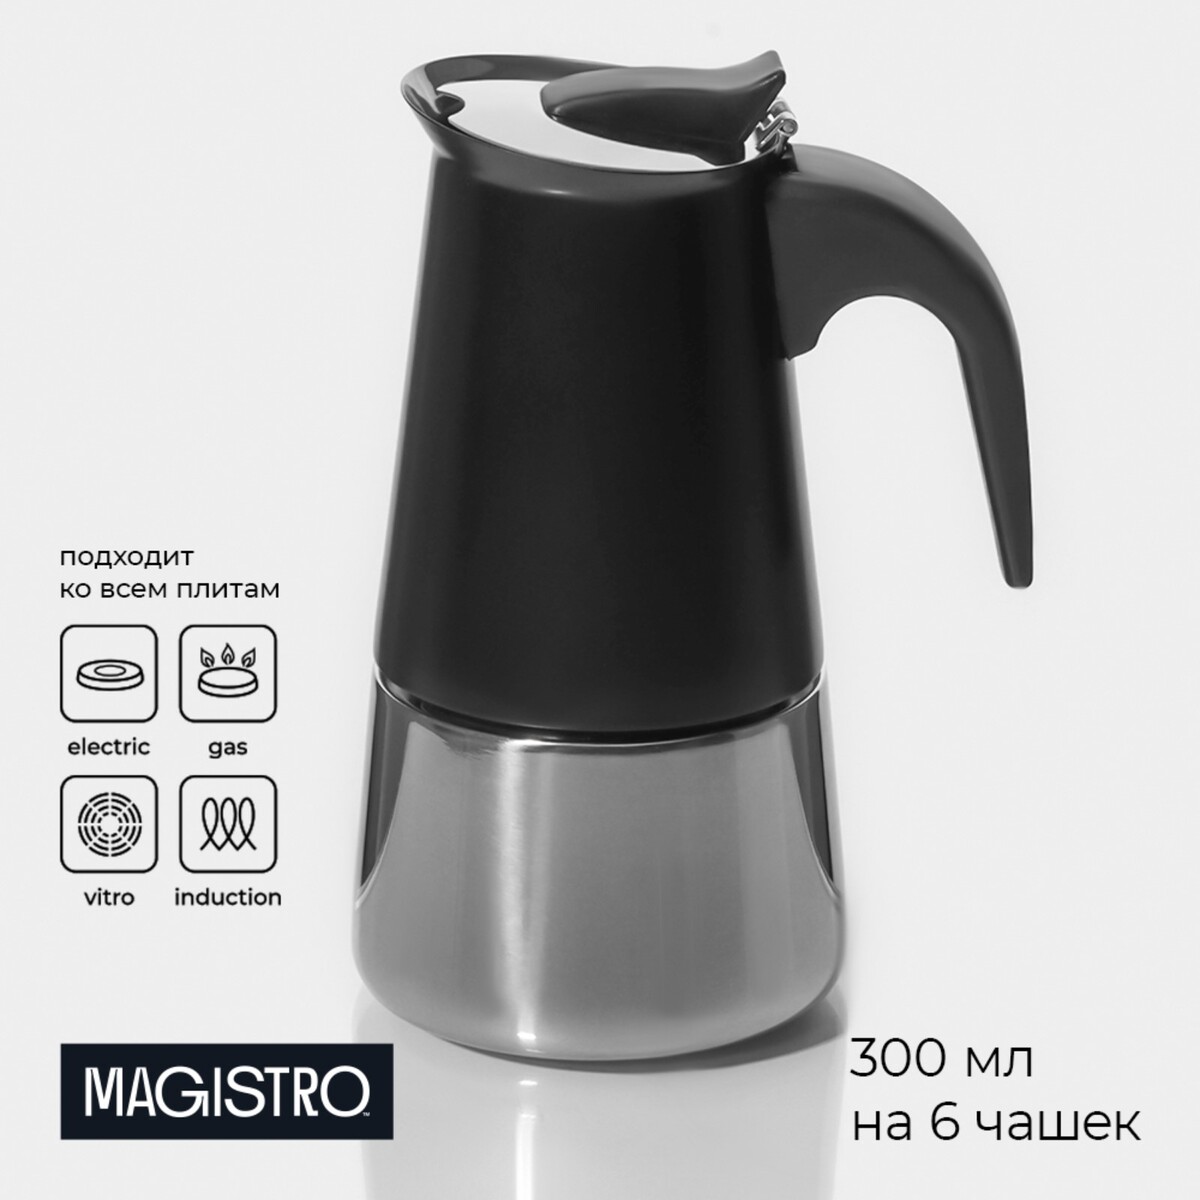 Кофеварка гейзерная magistro кофеварка гейзерная magistro semi на 6 чашек 300 мл нержавеющая сталь